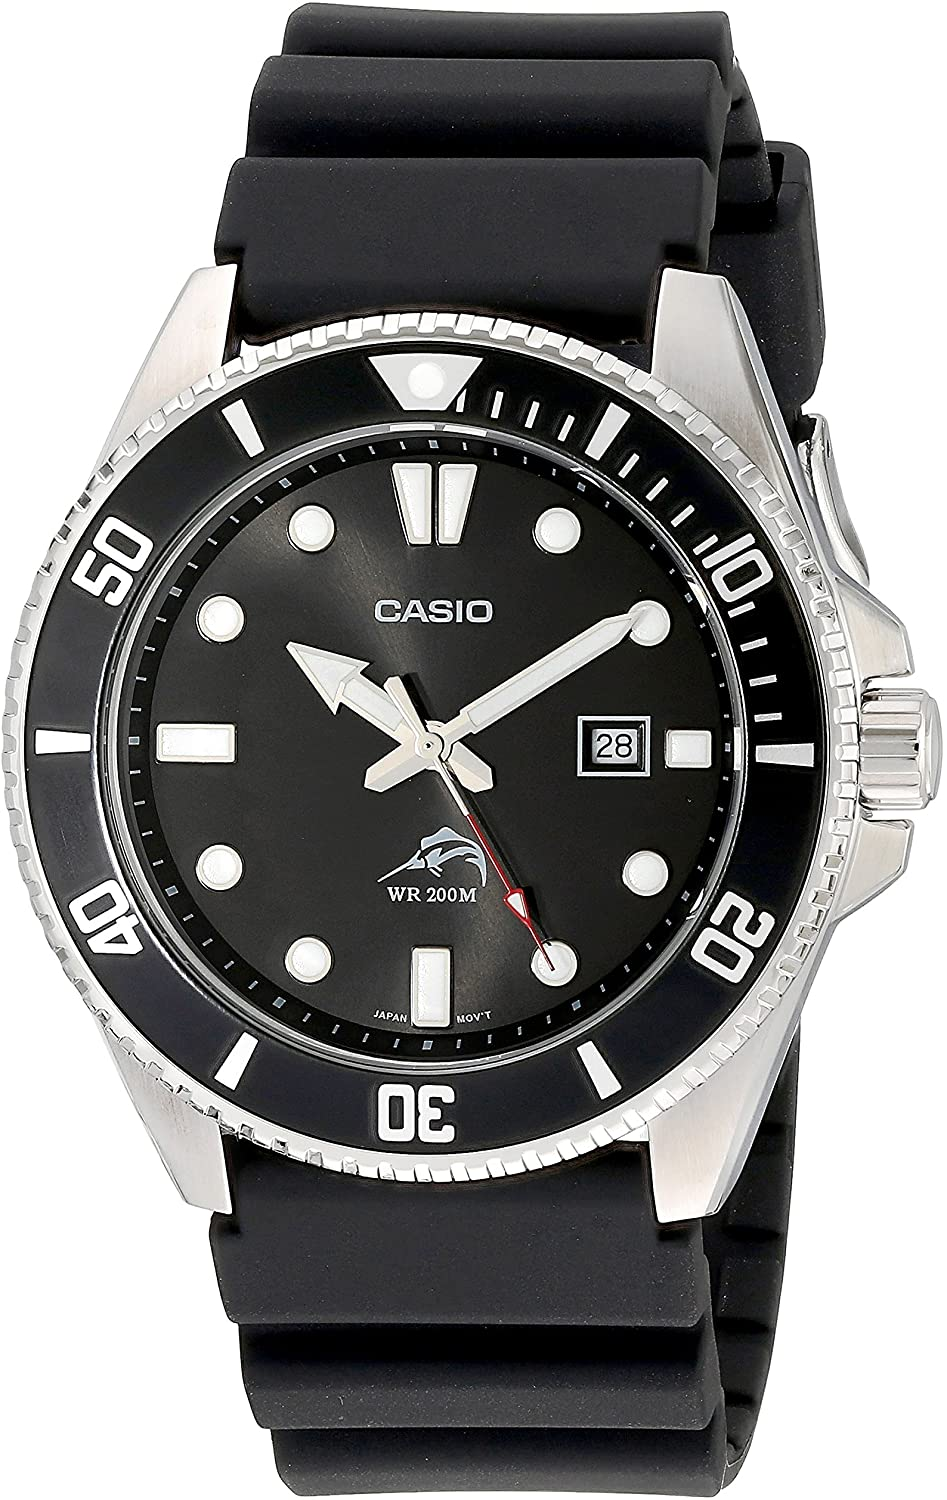 Casio Men's MDV106-1AV 200M Black Dive Watch Article